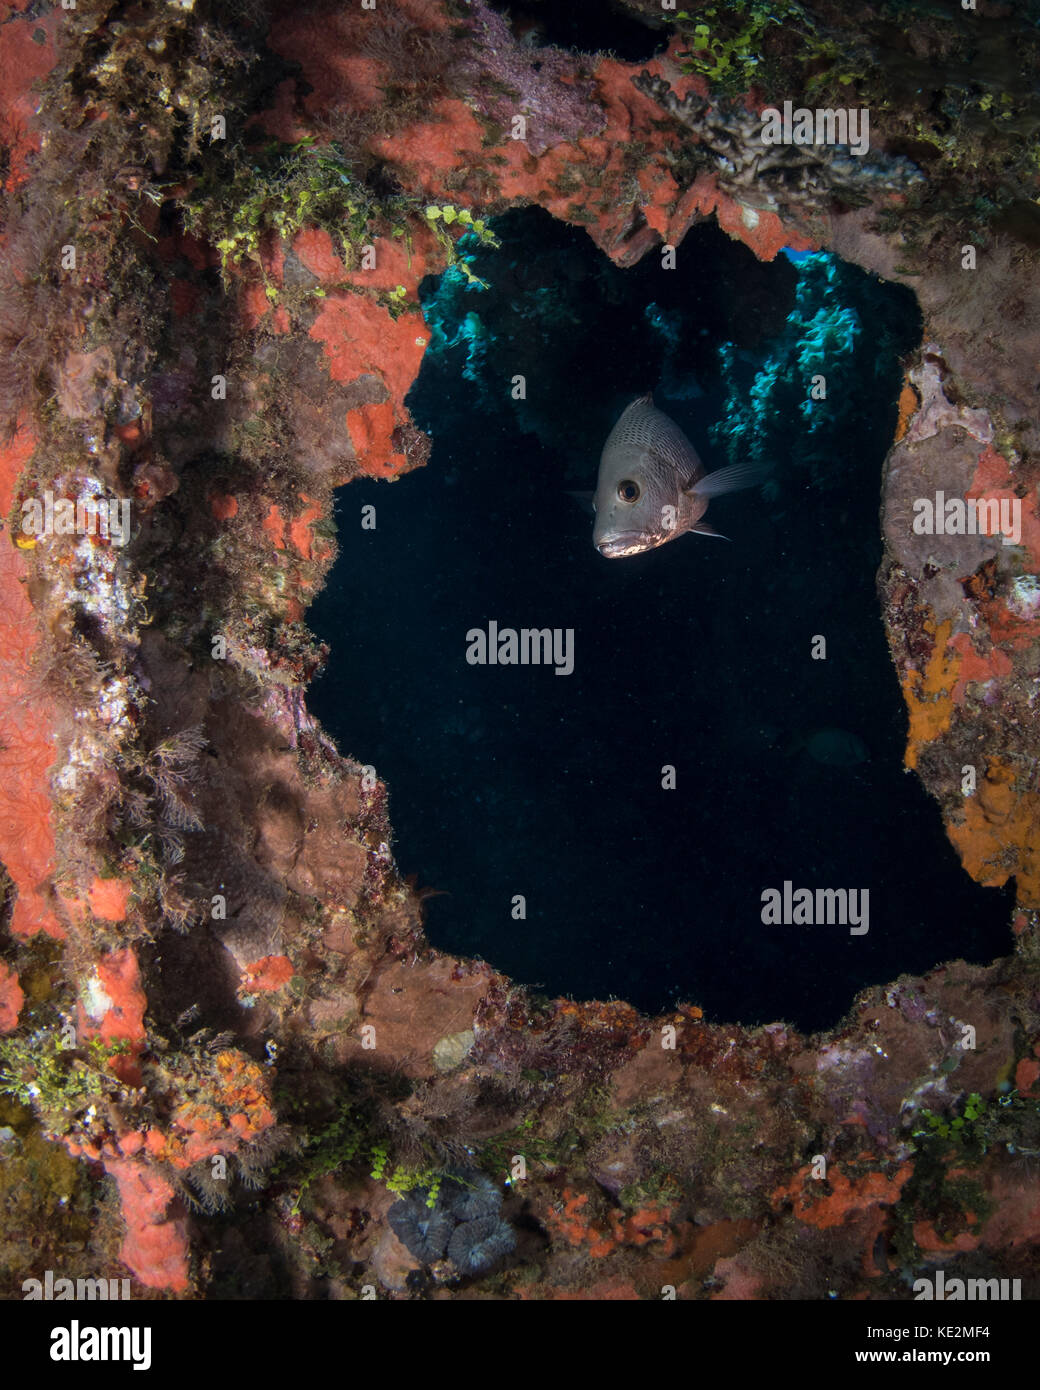 Fish on the Rio de Janeiro Maru shipwreck, Truk Lagoon, Micronesia. Stock Photo